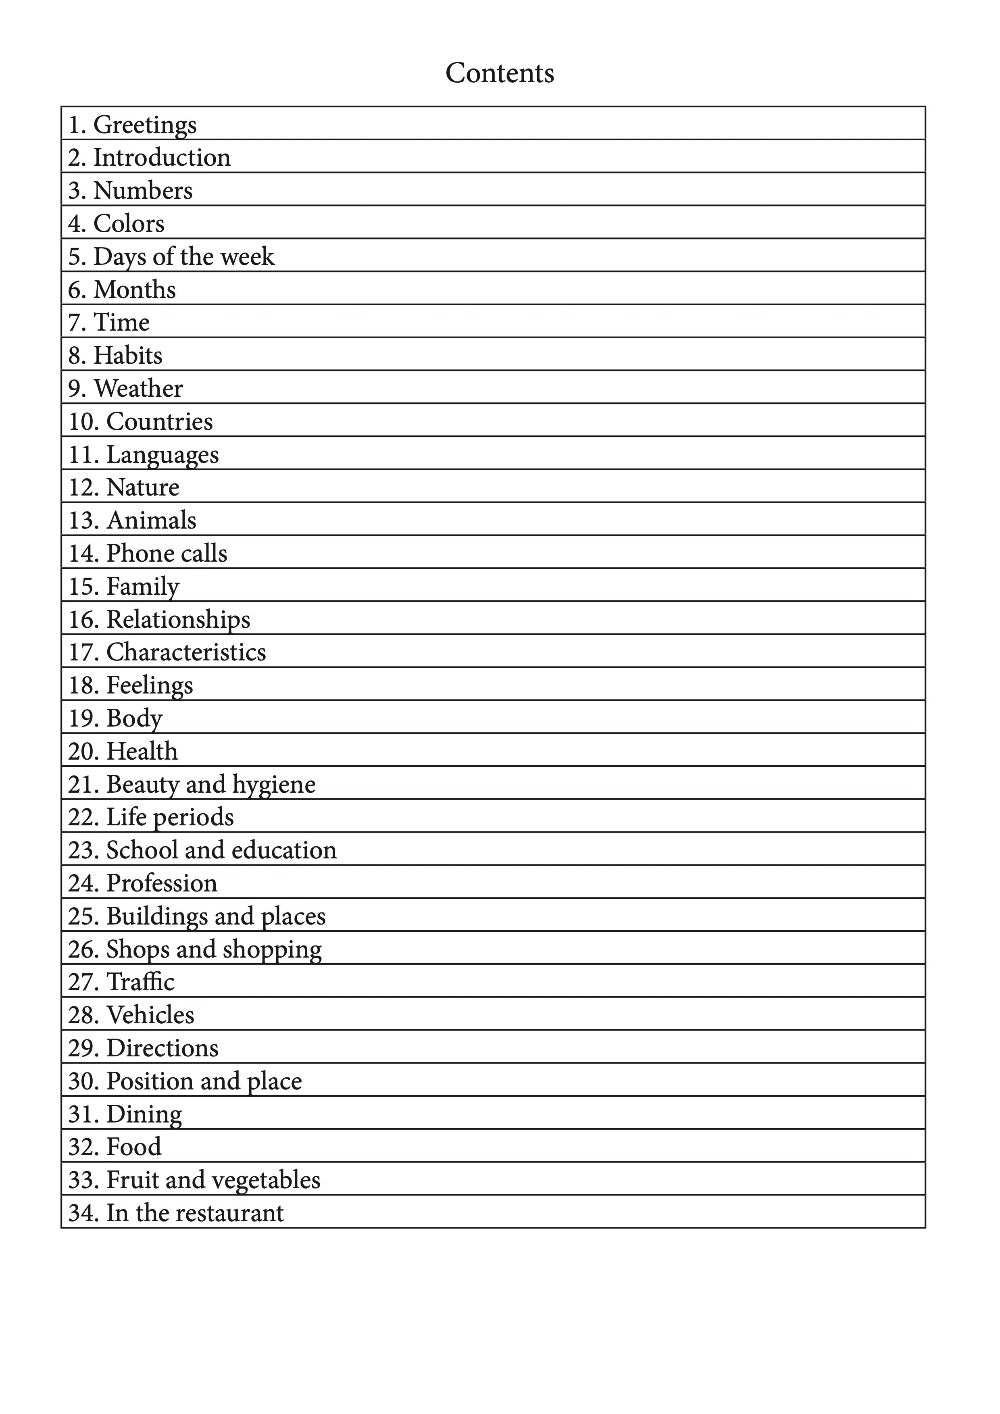 Tsonga language learning notebook contents page 1